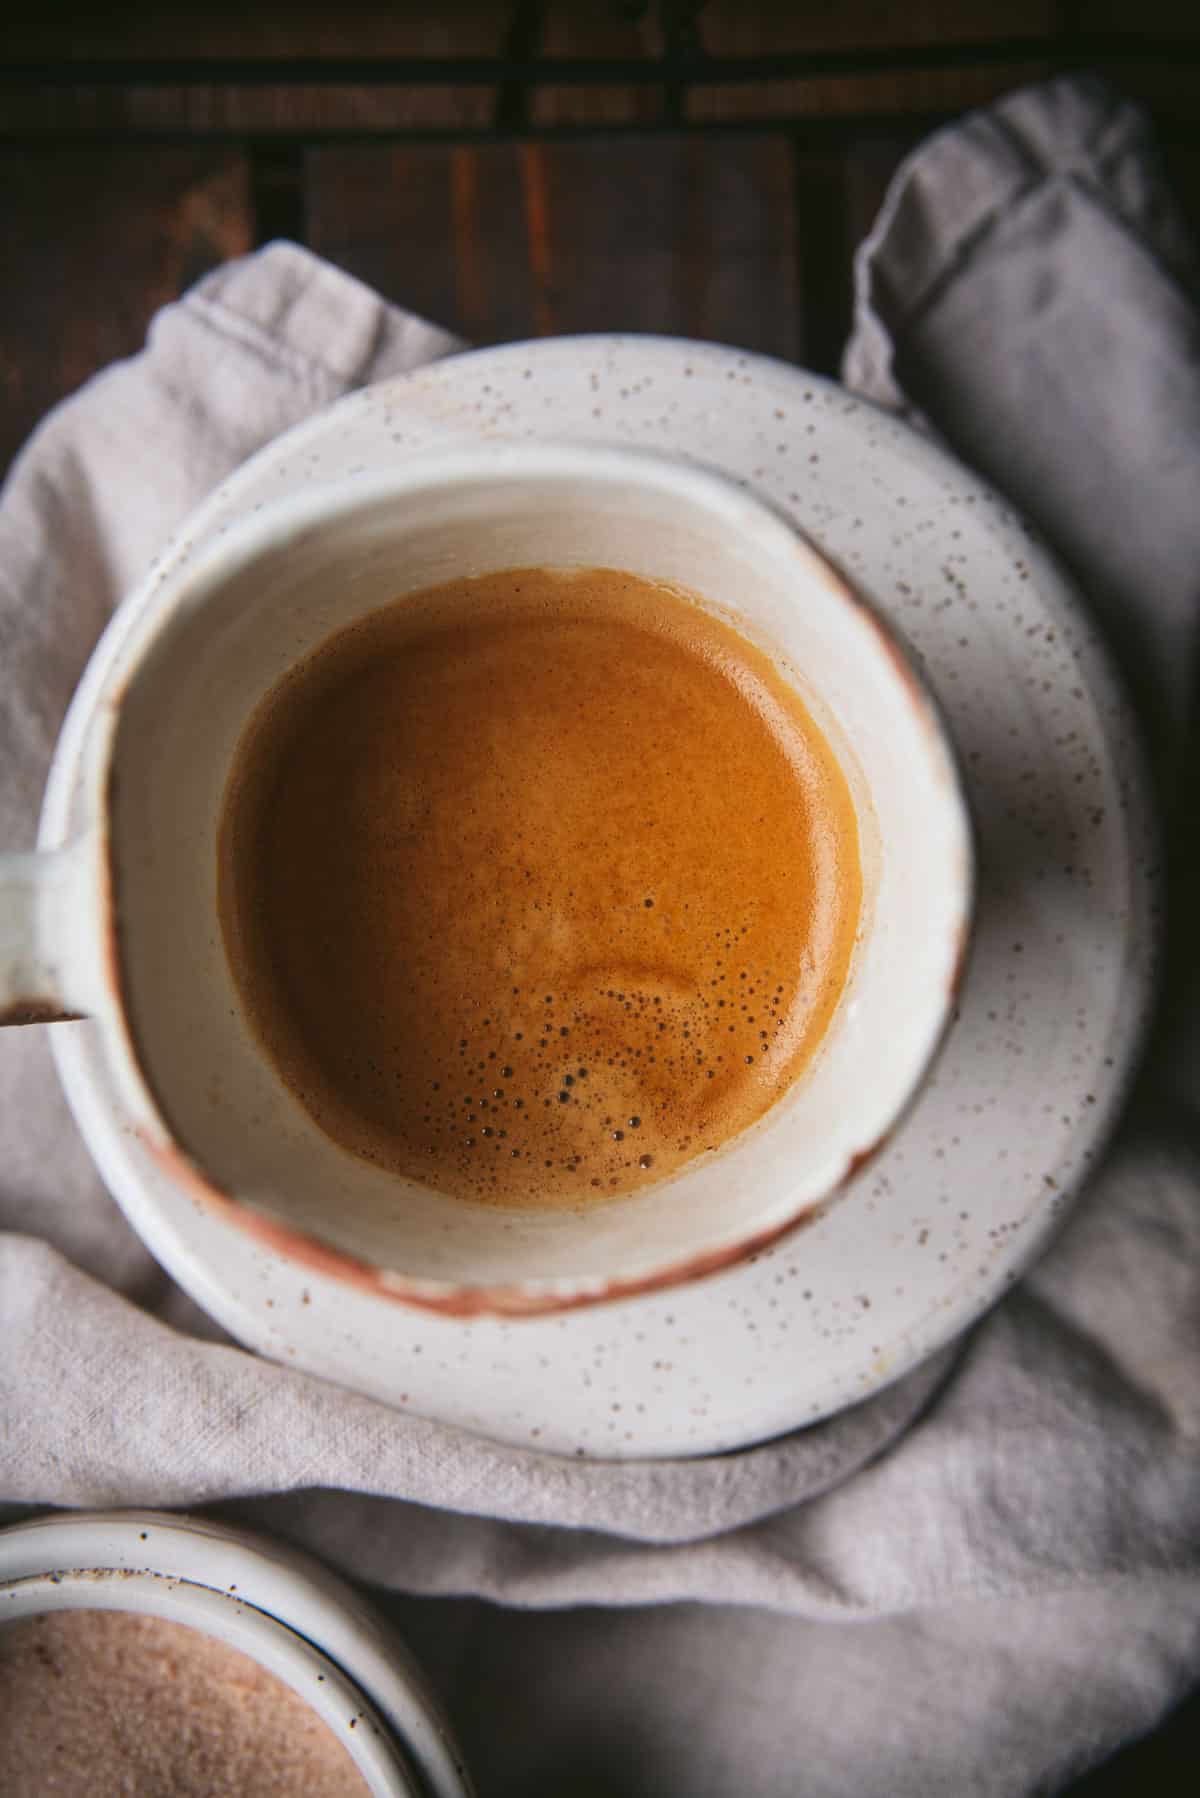 Overhead view of espresso in a ceramic mug.